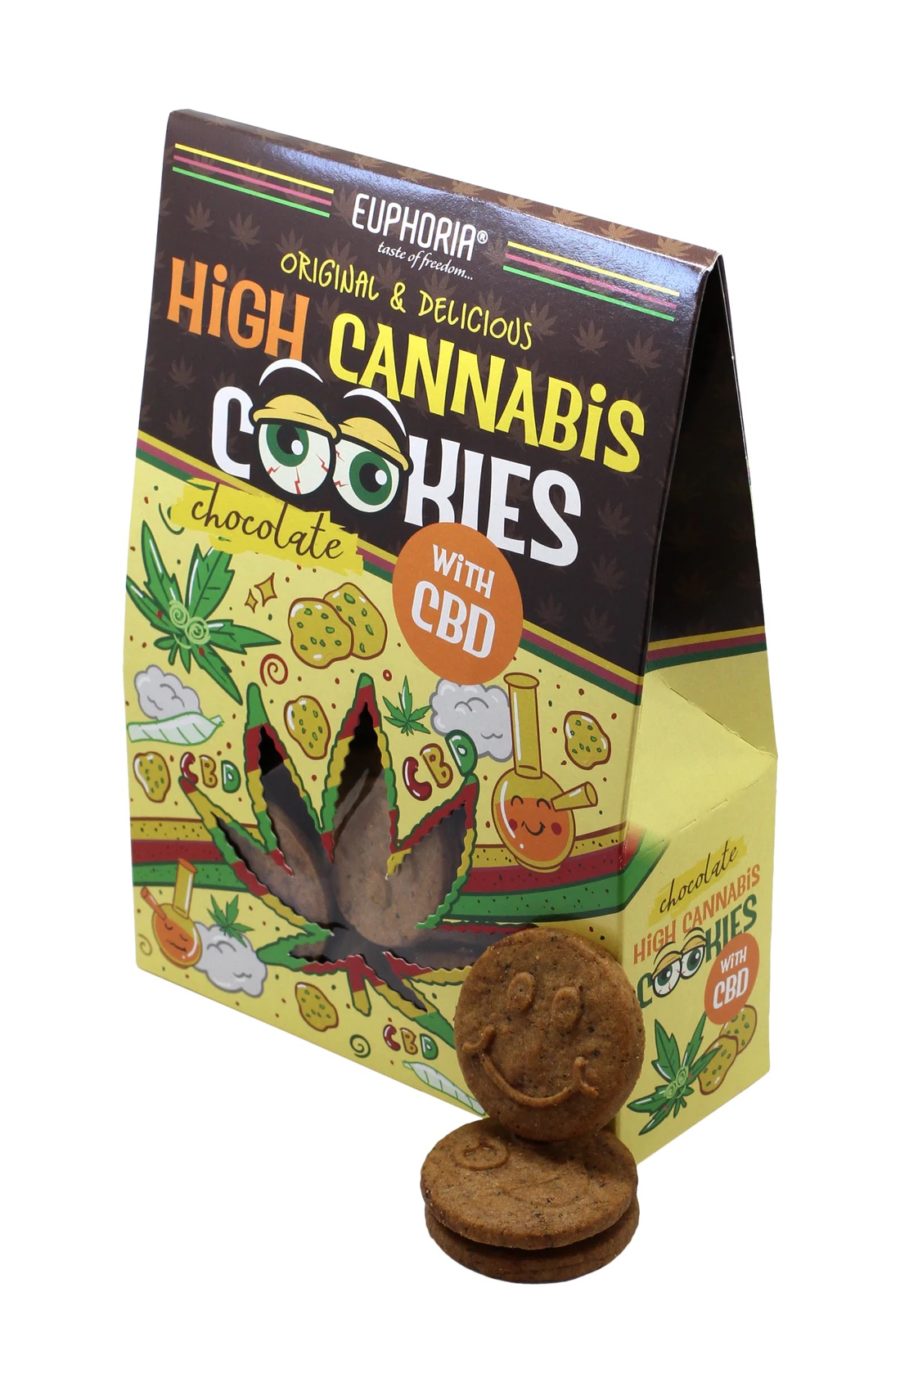 High Cannabis Cookies – Chocolate CBD BROWNIES & COOKIES - XMANIA Ireland